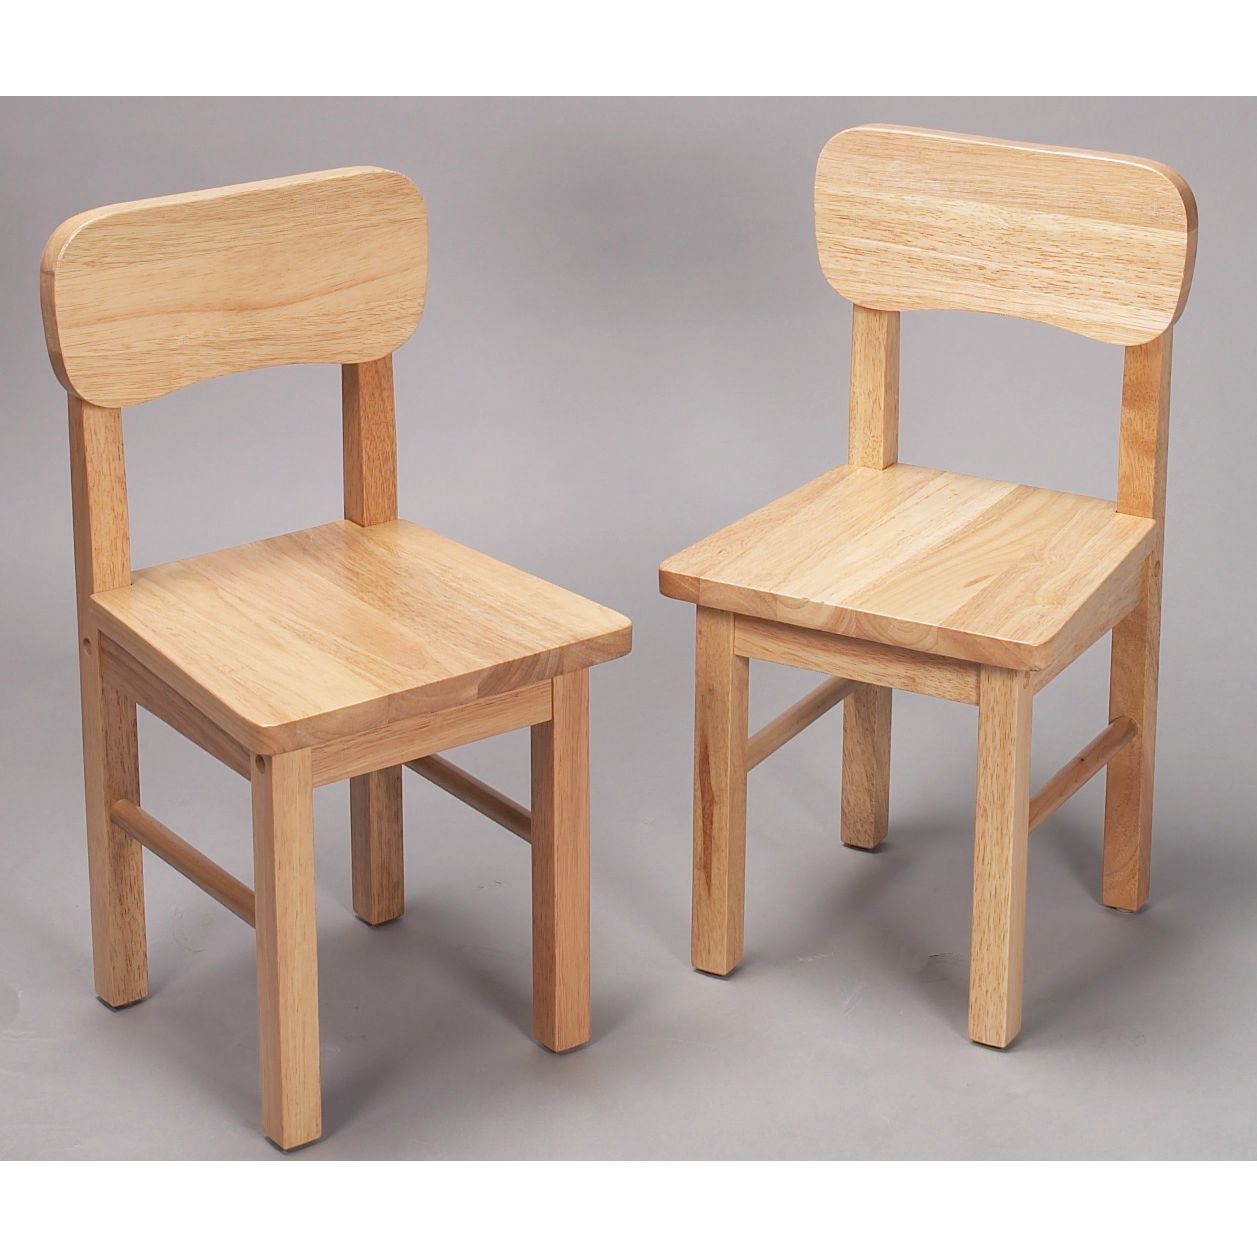 Gift Mark 2 Pair Chair Set (Natural)